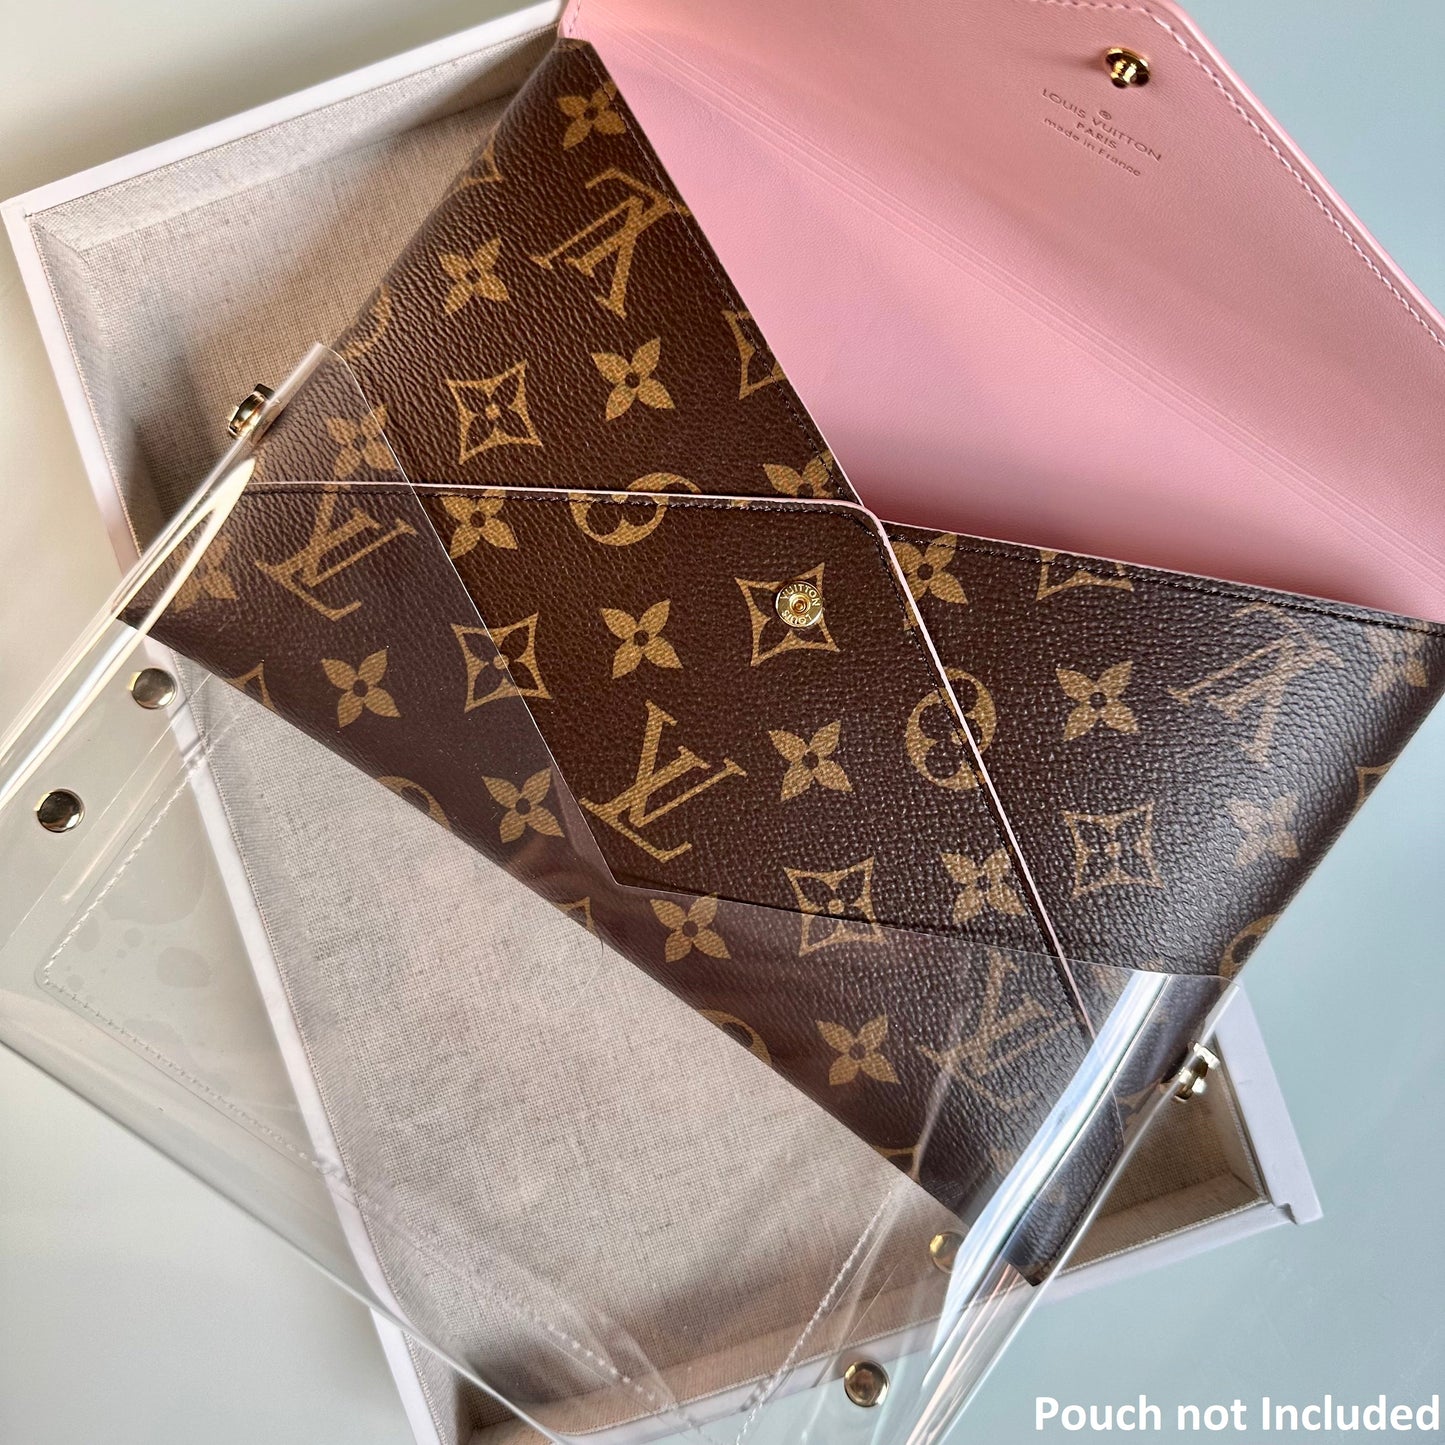 Louis Vuitton Large Kirigami Envelope Pouch